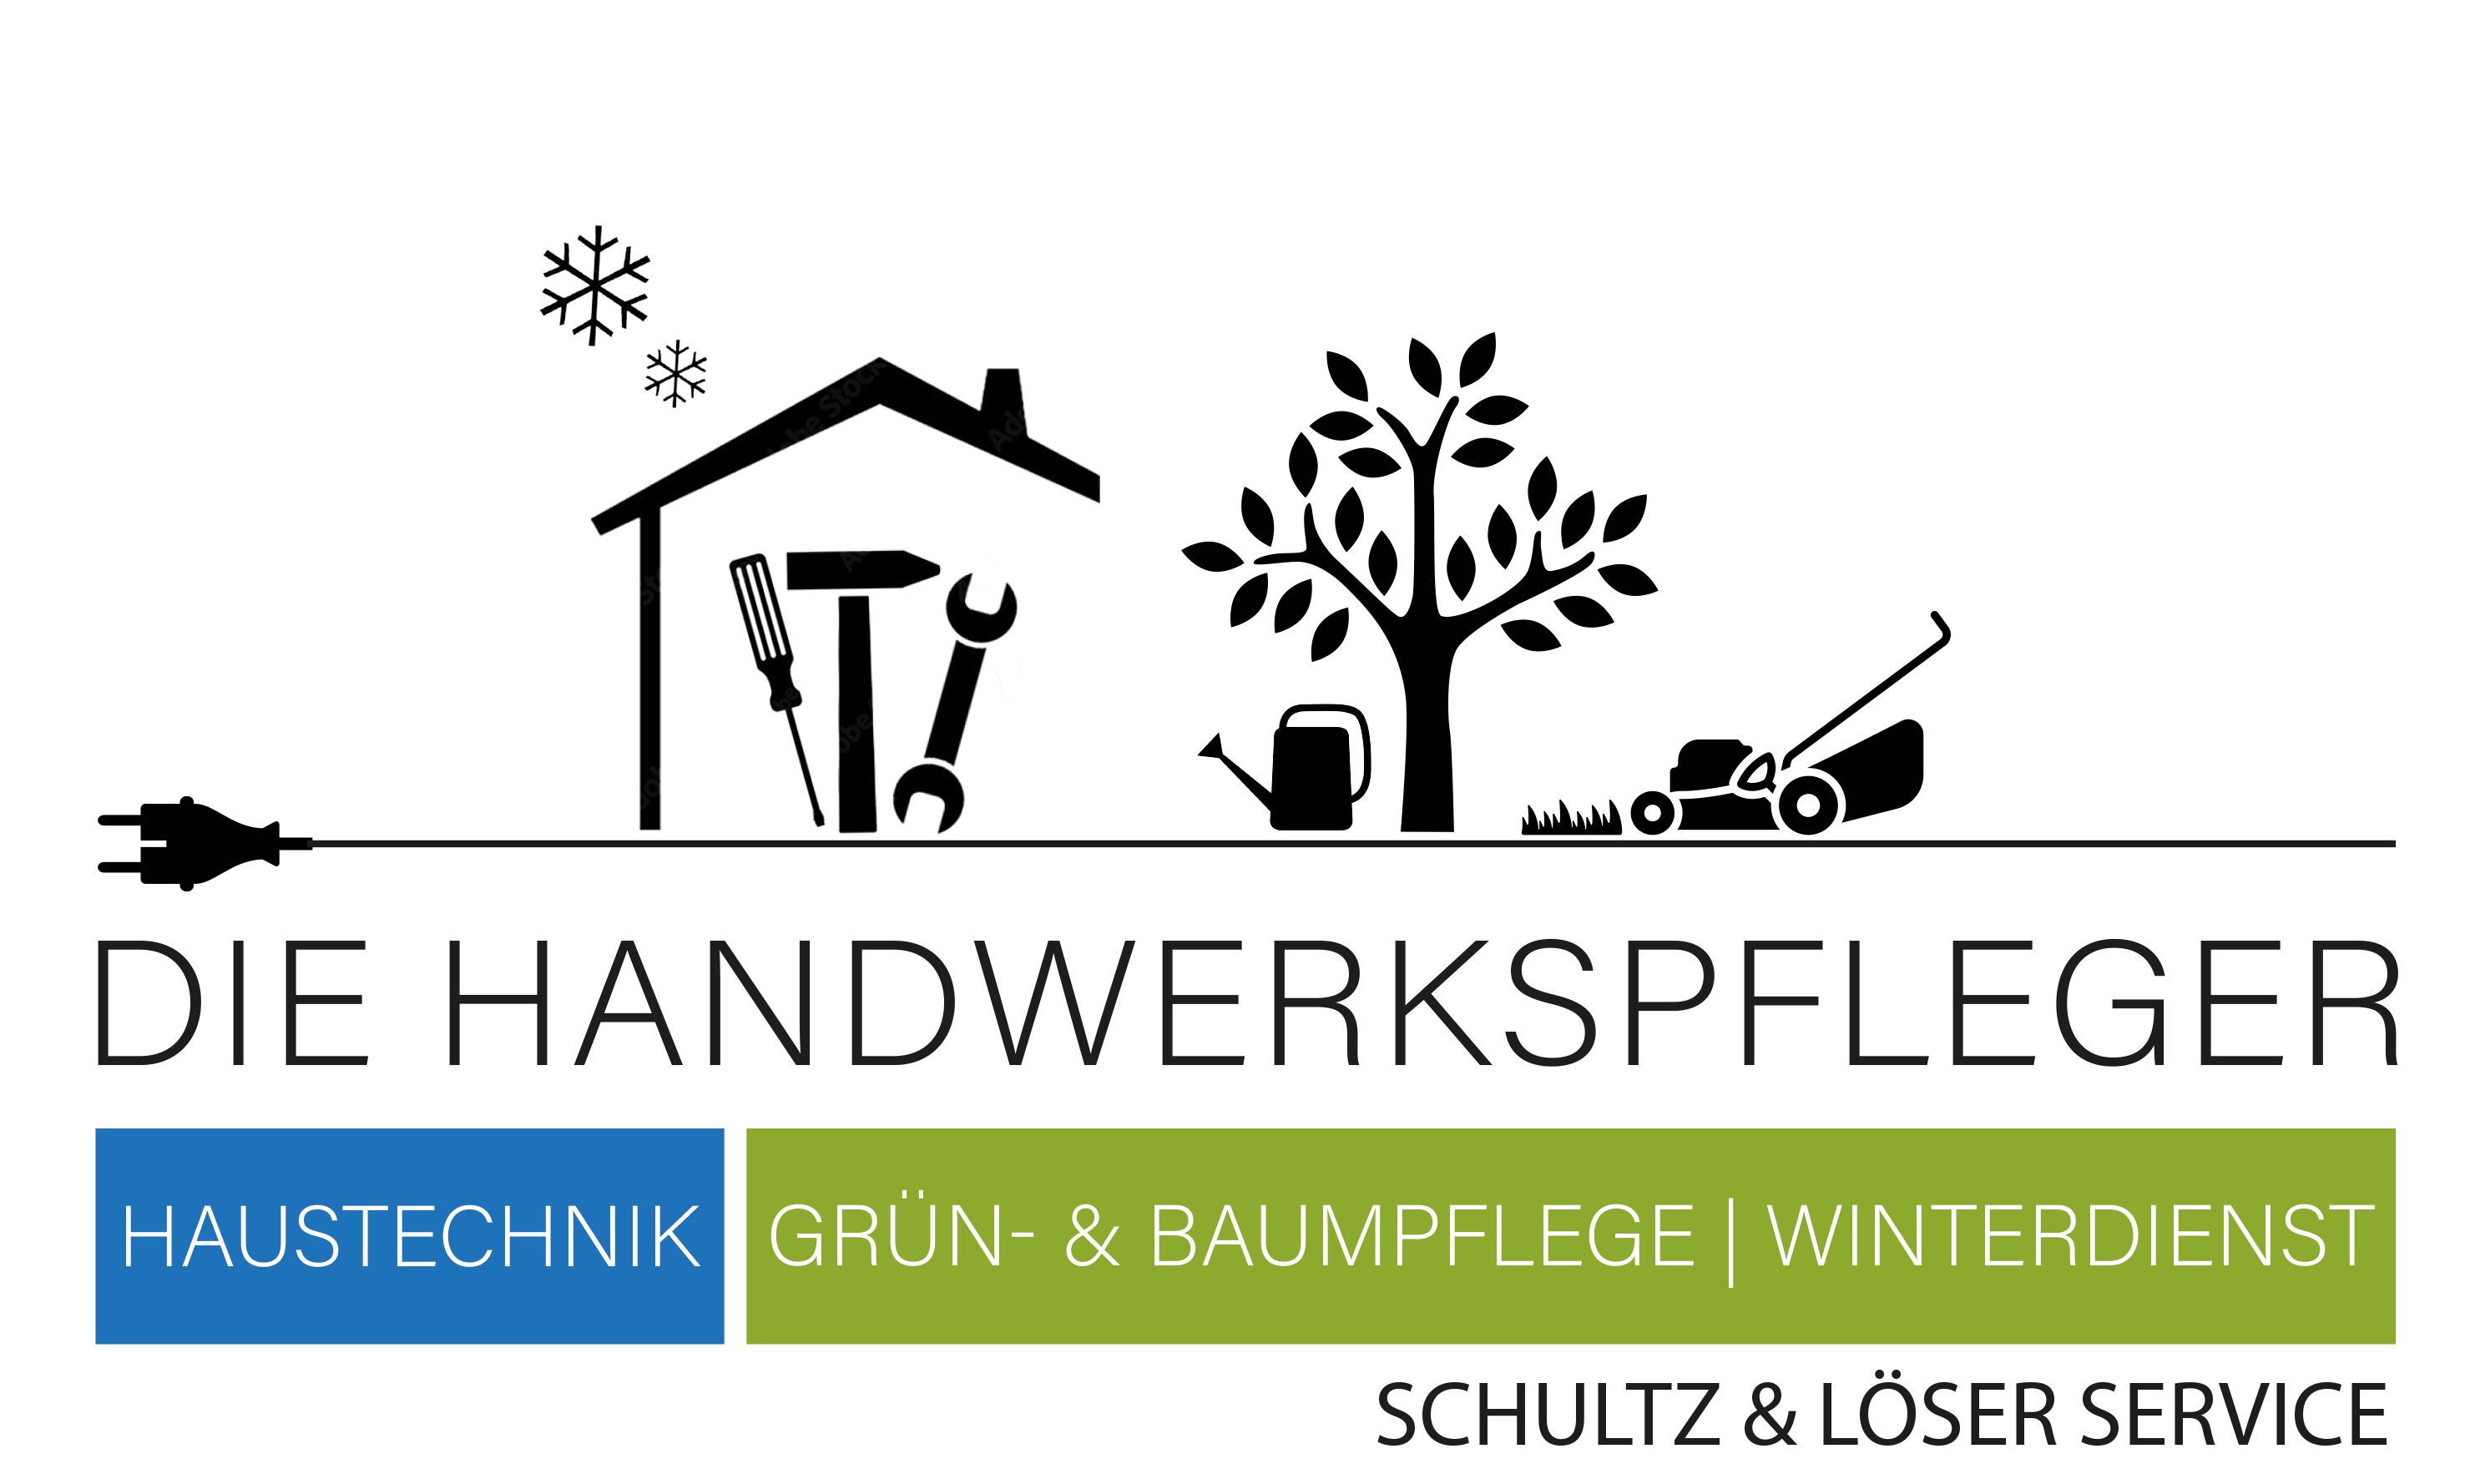 Haustechnik Berlin Brandenburg